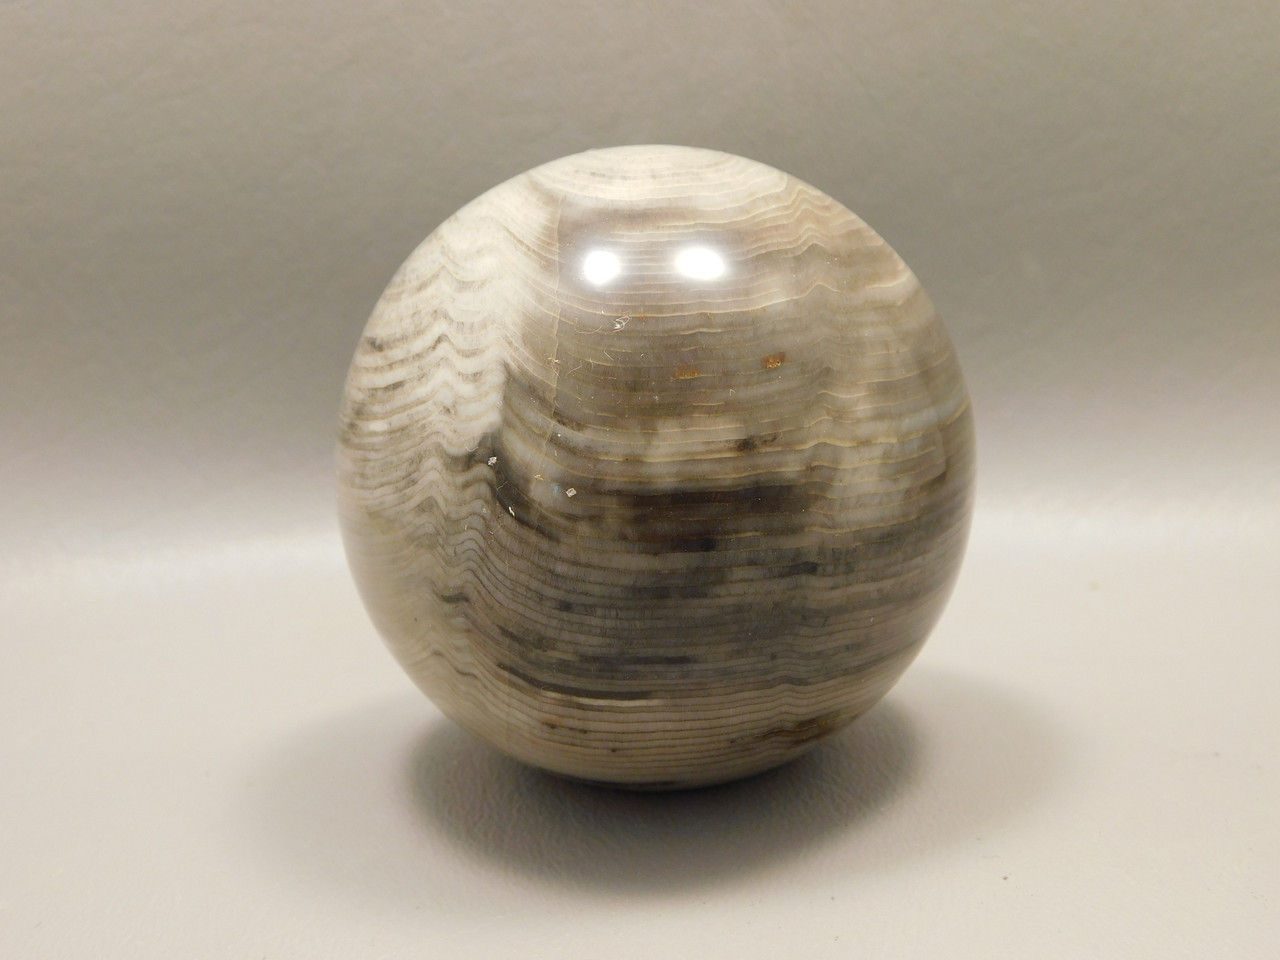 Petrified Wood 2.6 inch Stone Sphere Fossil Sequoia USA #O1